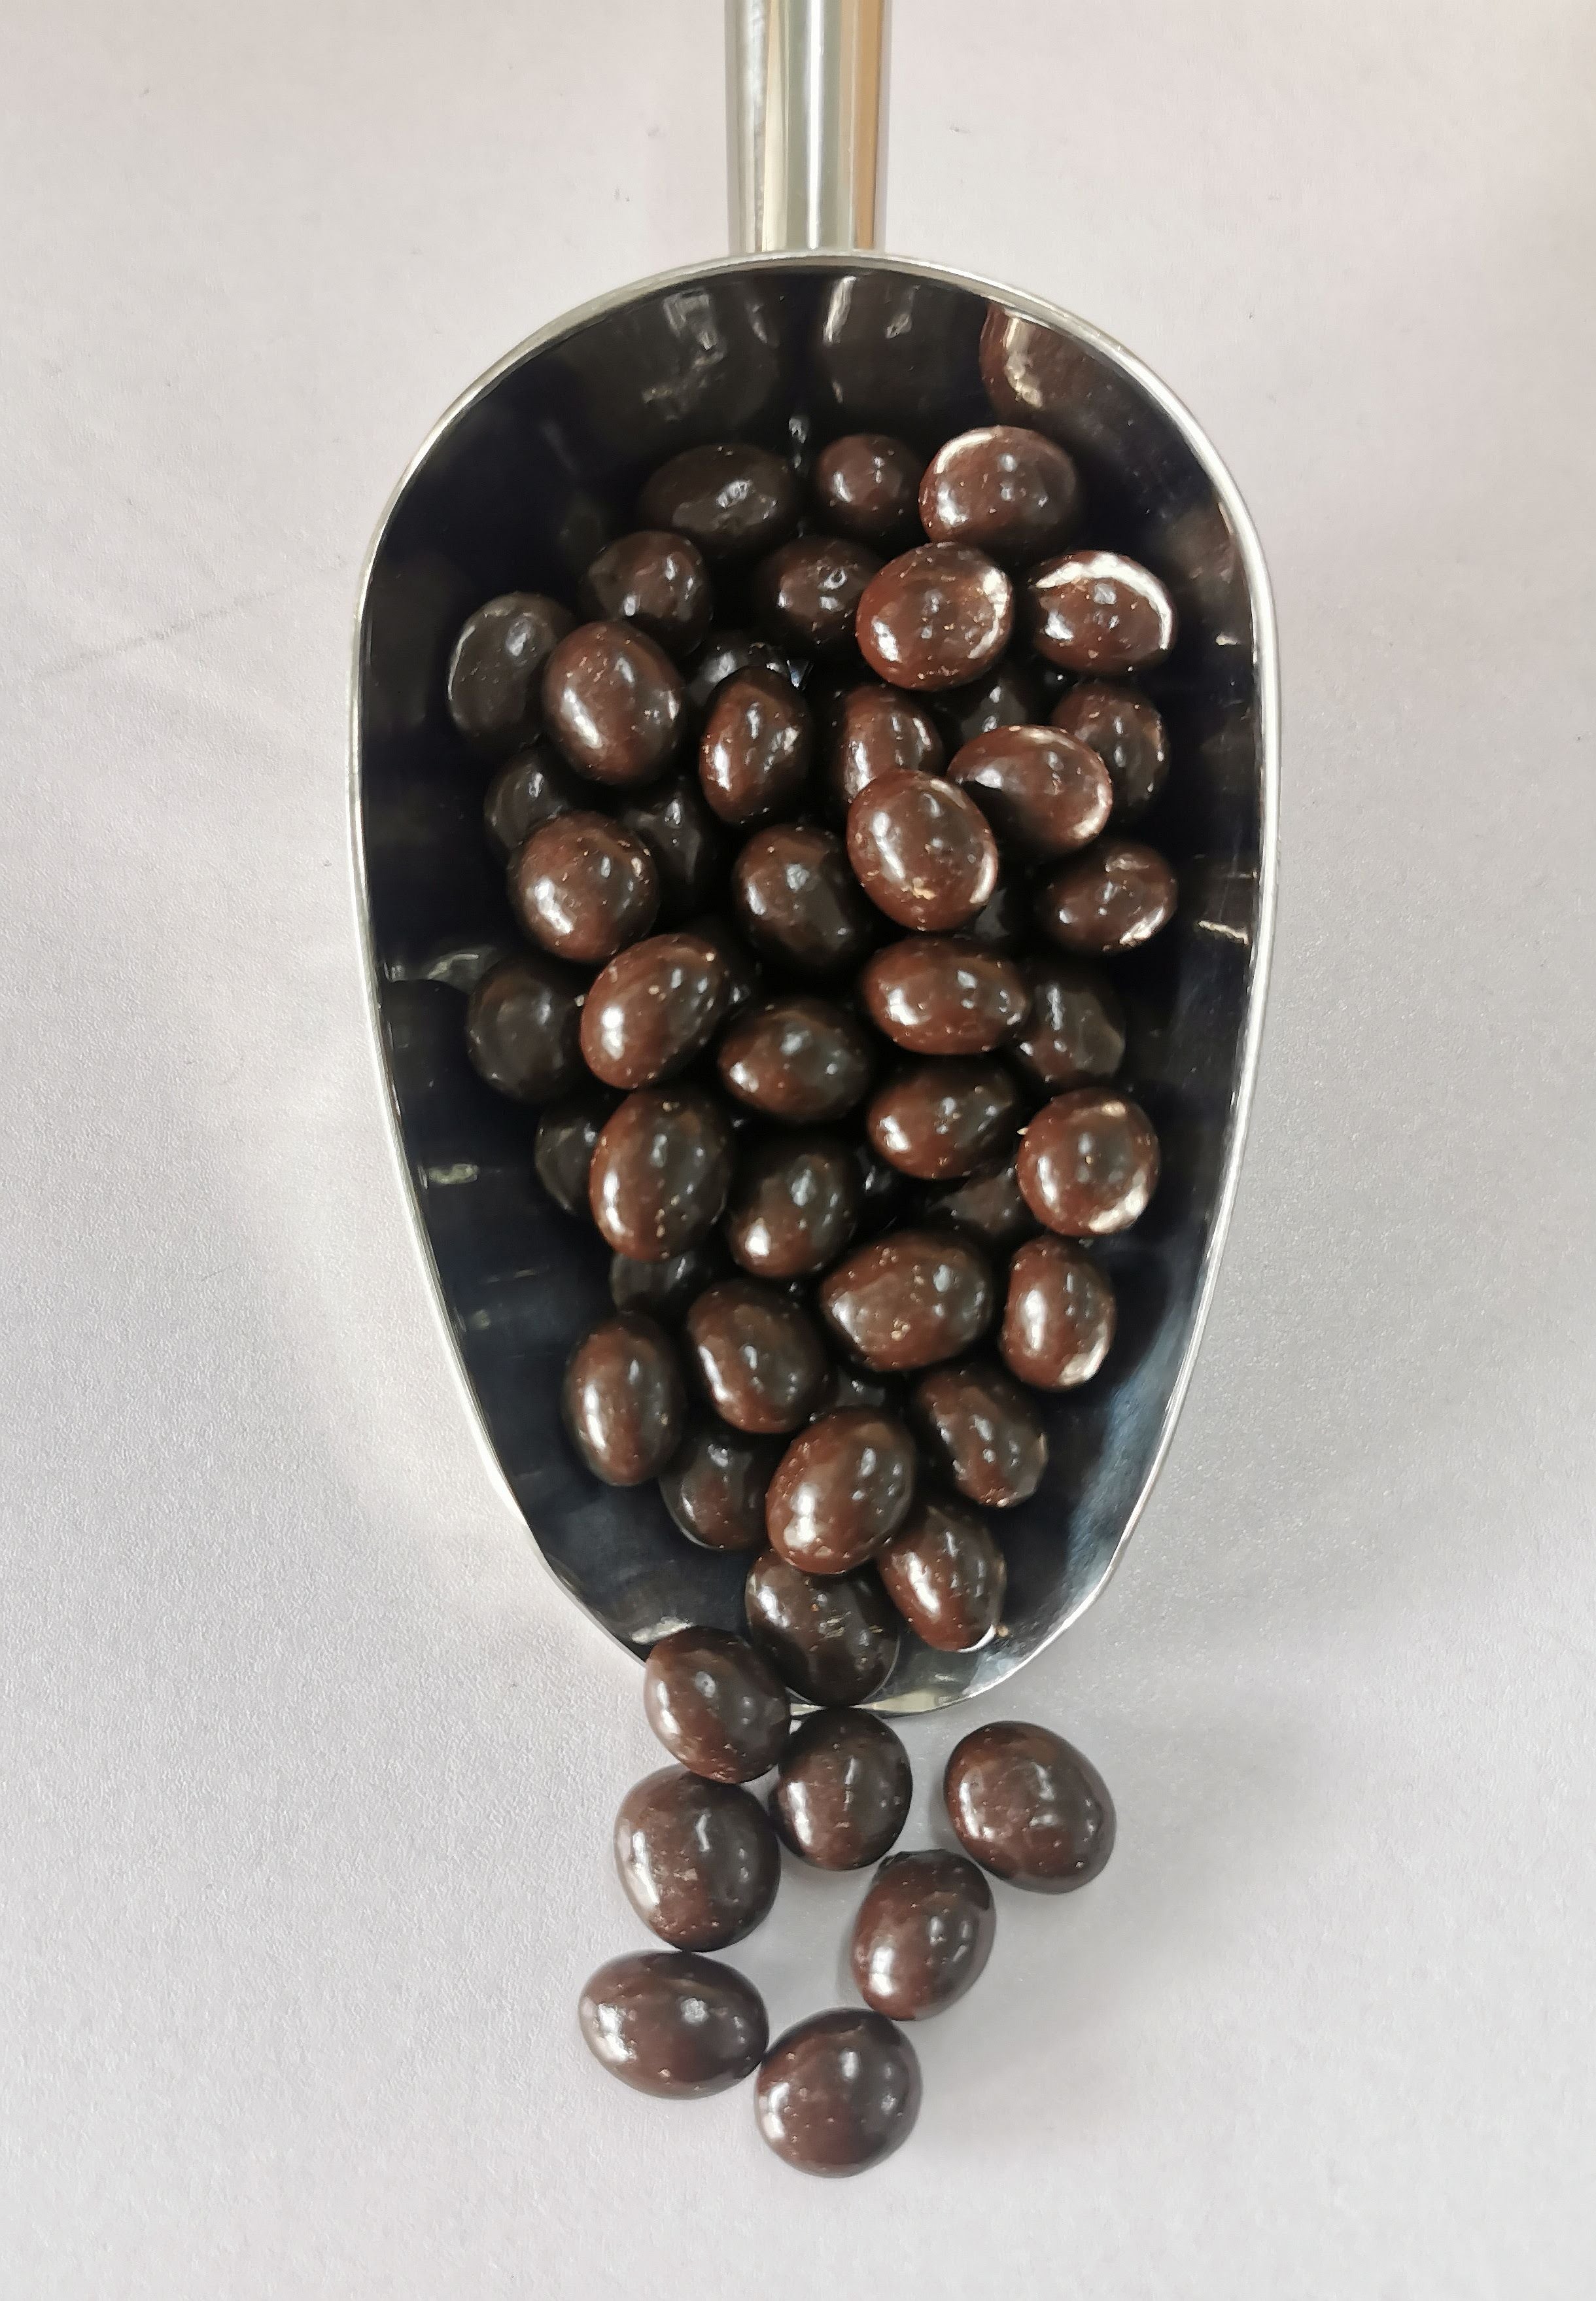 Dark Chocolate Coated Coffee Beans